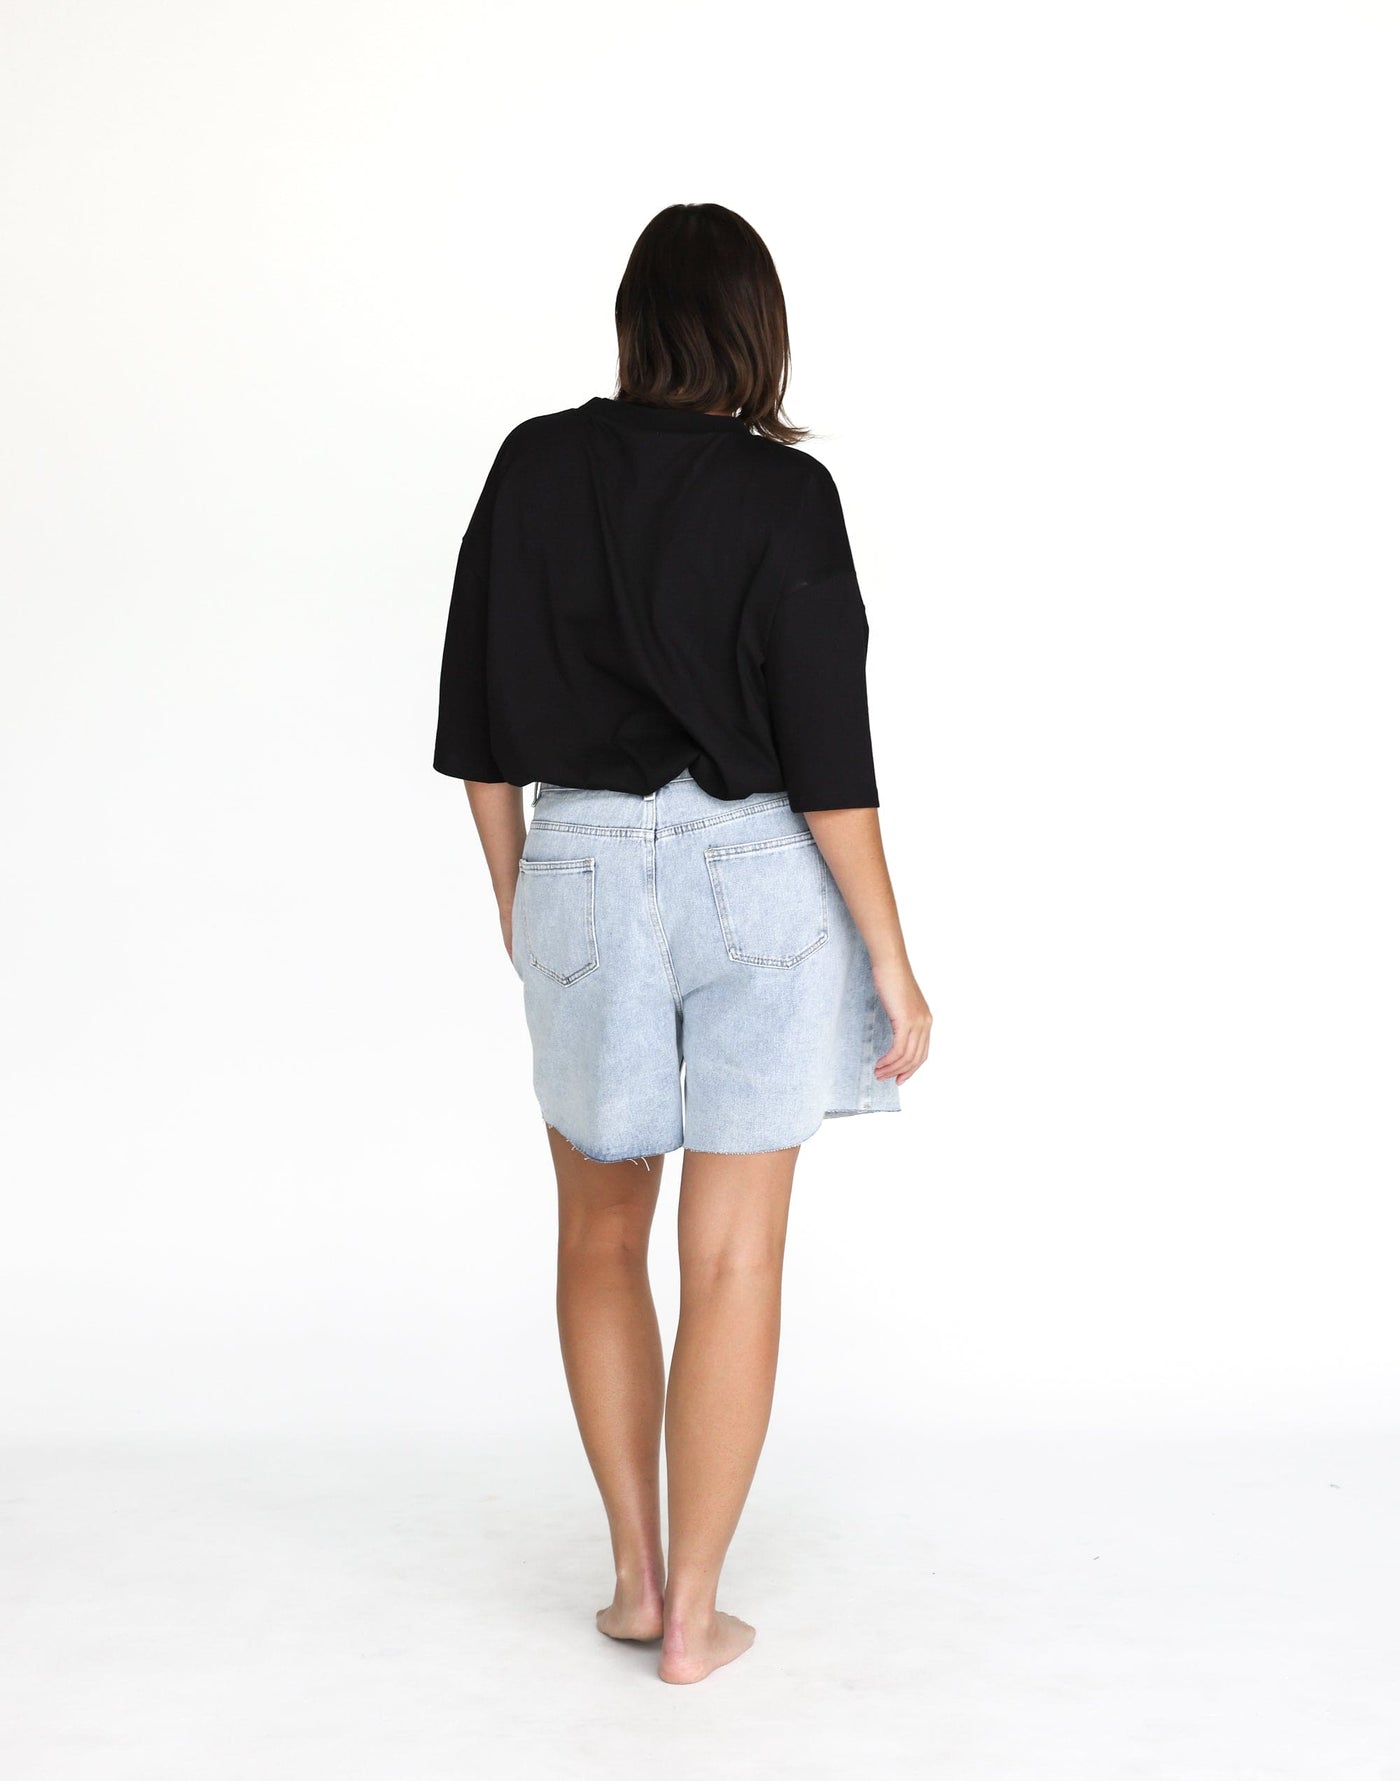 Jordan Denim Shorts (Light Vintage) - Long Frayed Edge Short - Women's Shorts - Charcoal Clothing